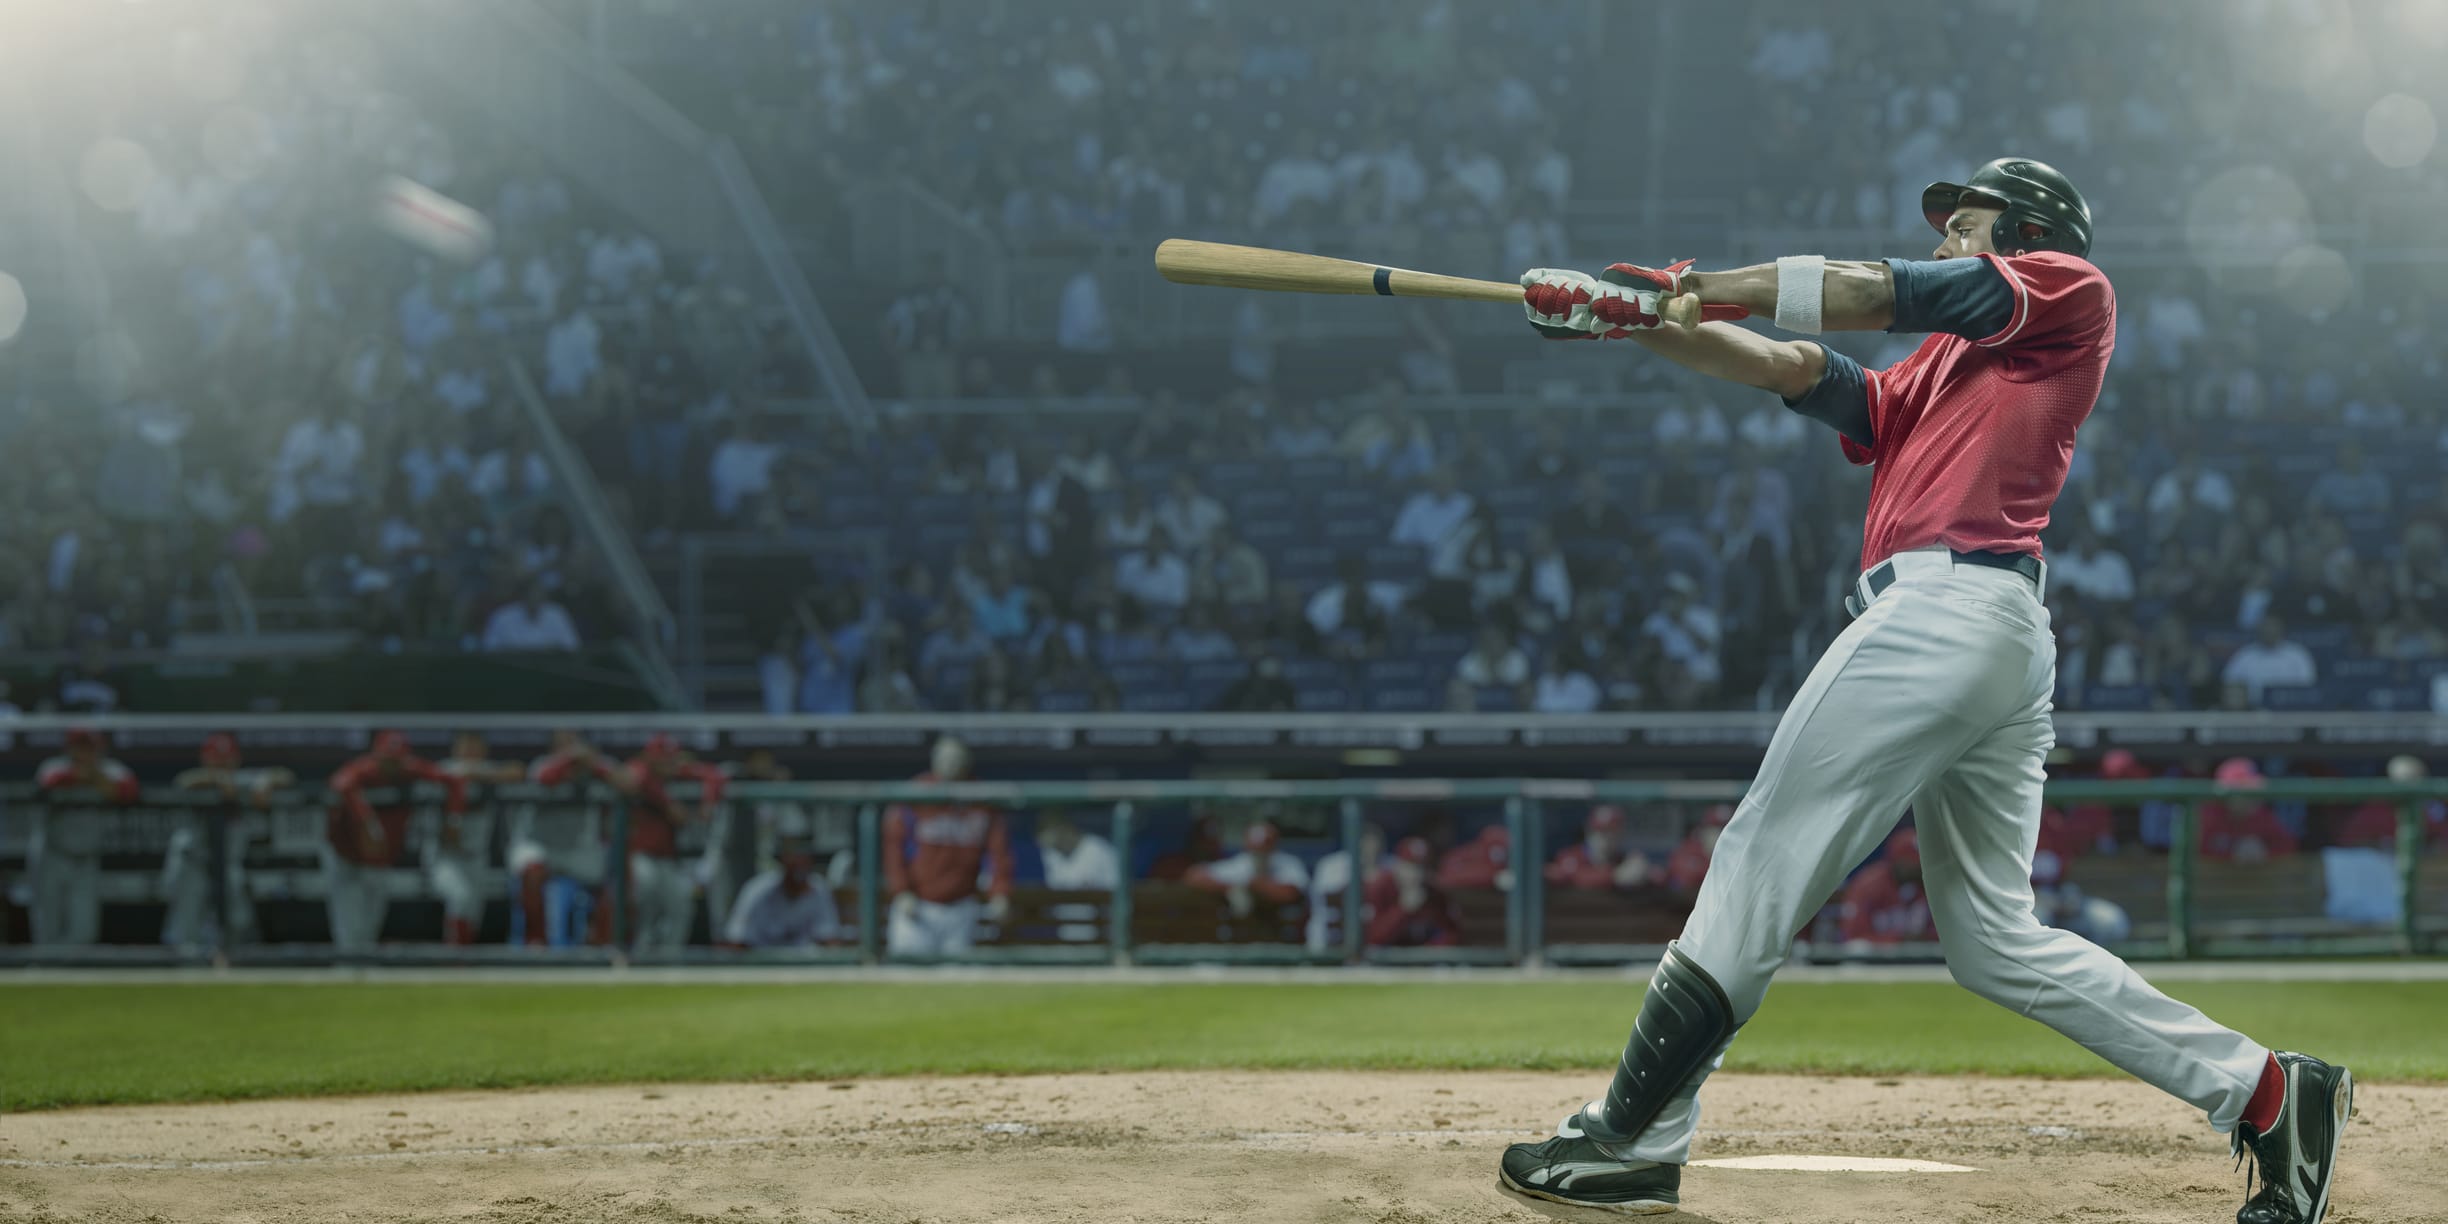 A baseball player hitting a baseball with a bat.